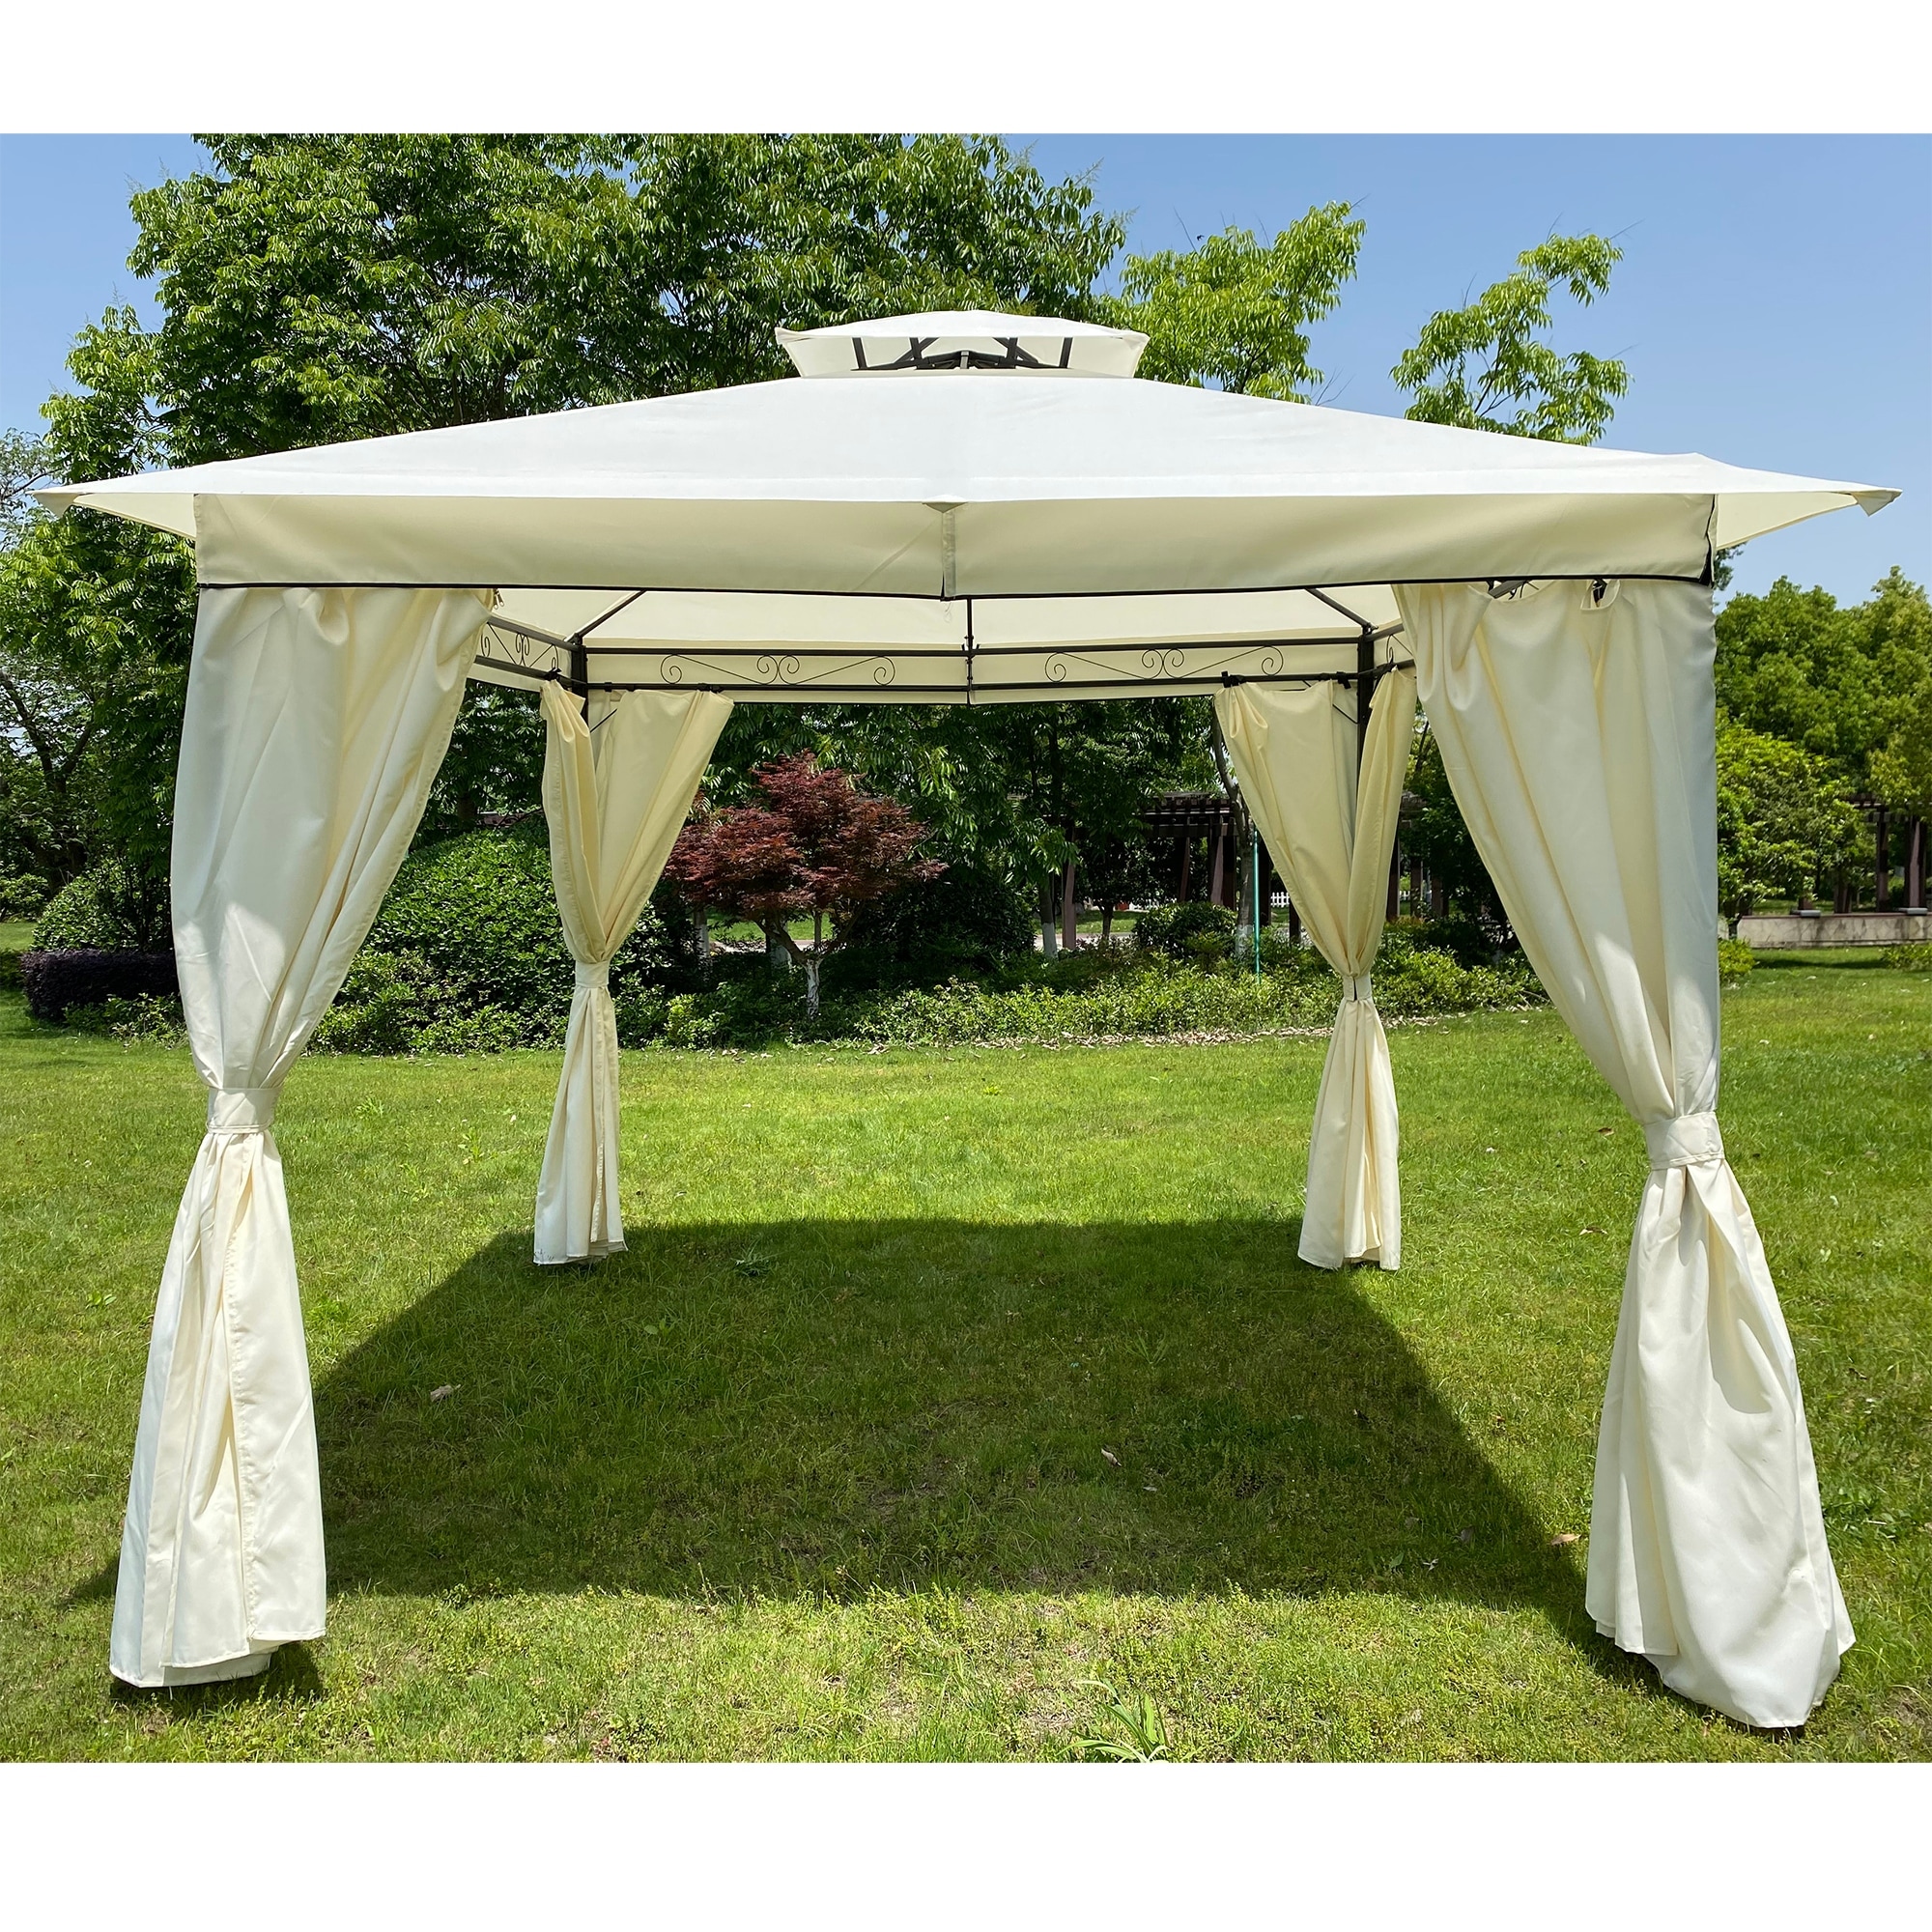 TiramisuBest Outdoor Patio Gazebo Tent Shading Gazebo Canopy with Curtains 10x10 Ft